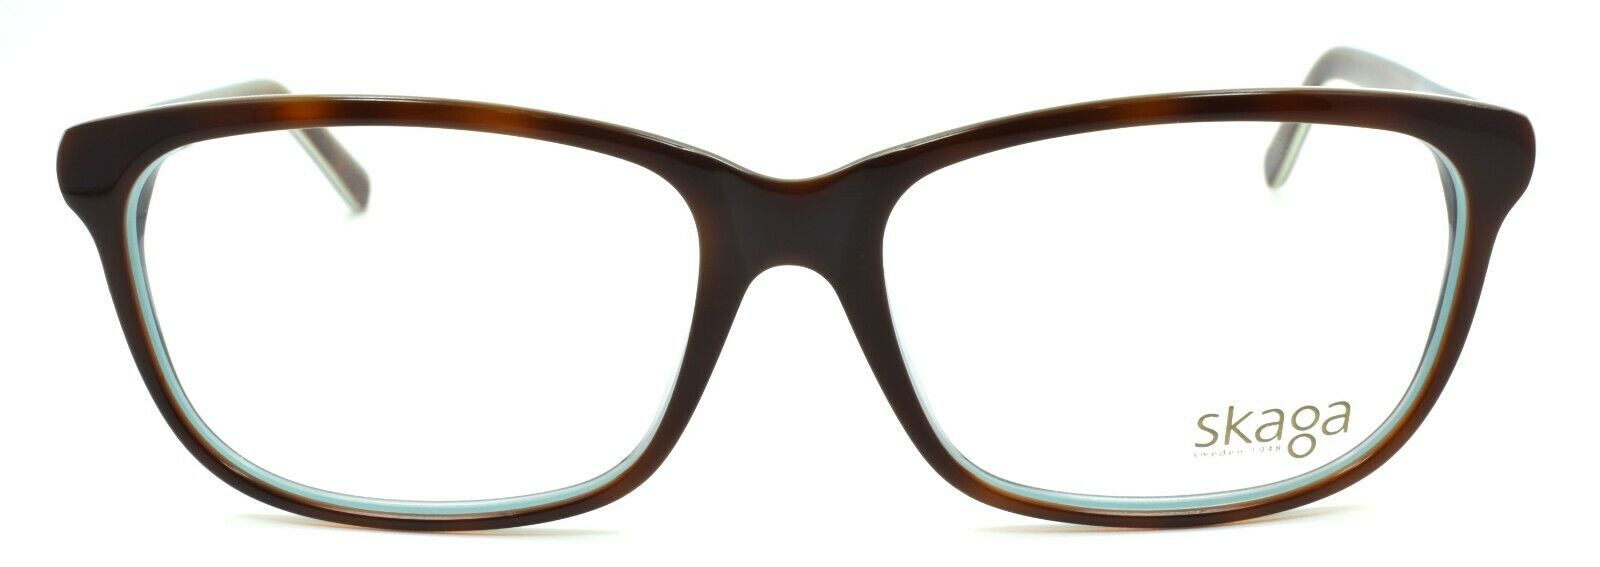 2-Skaga 2468 Eleonora 9201 Women's Eyeglasses Frames 55-15-135 Brown / Blue-IKSpecs